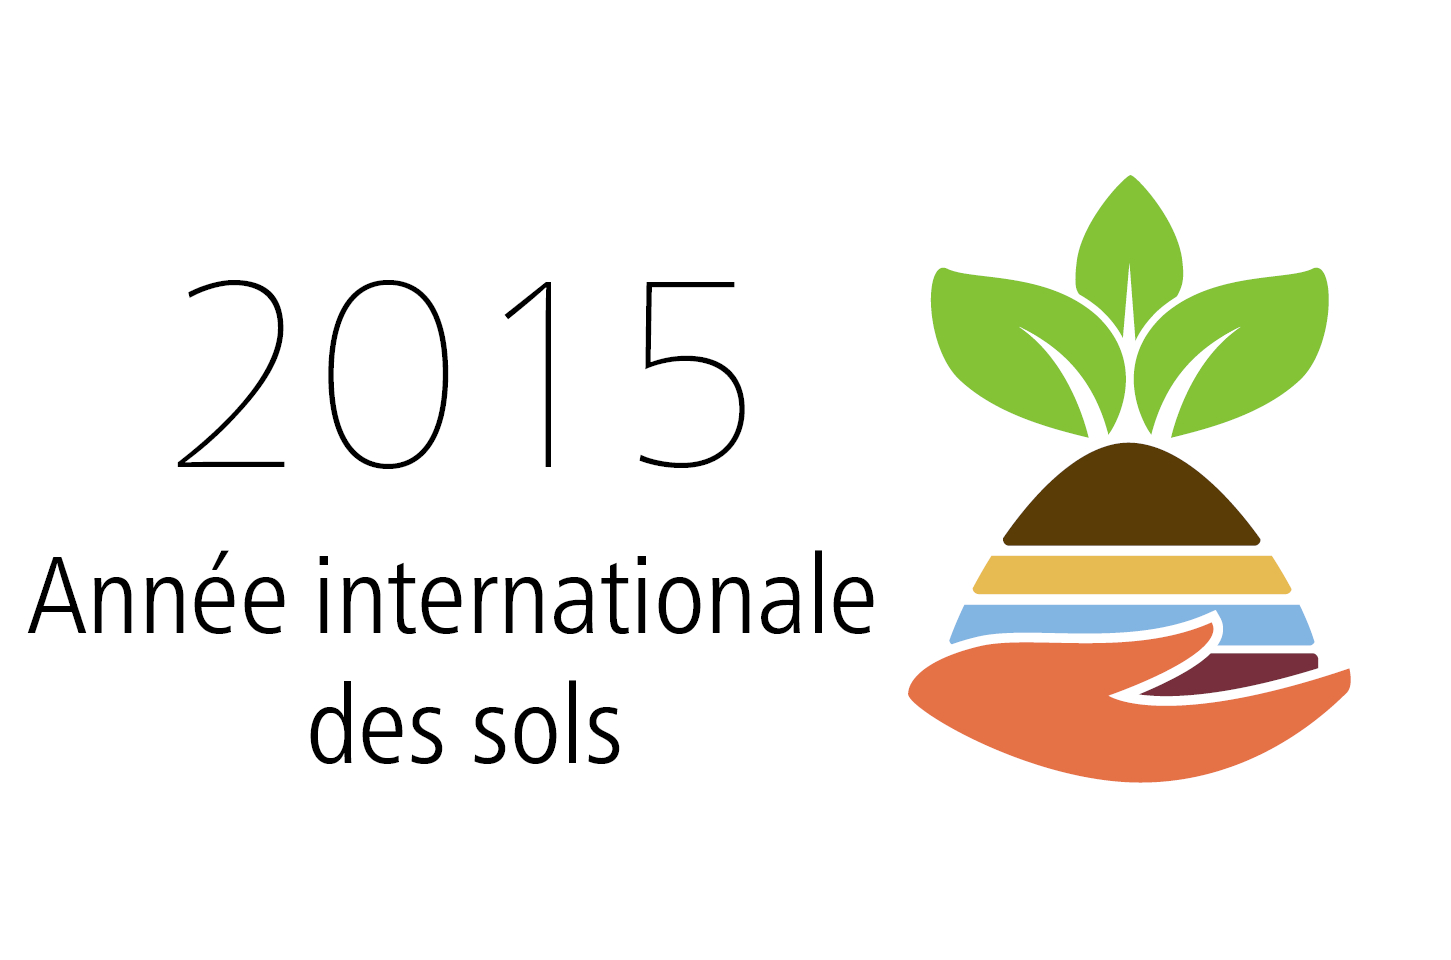 2015 annee internationale des sols